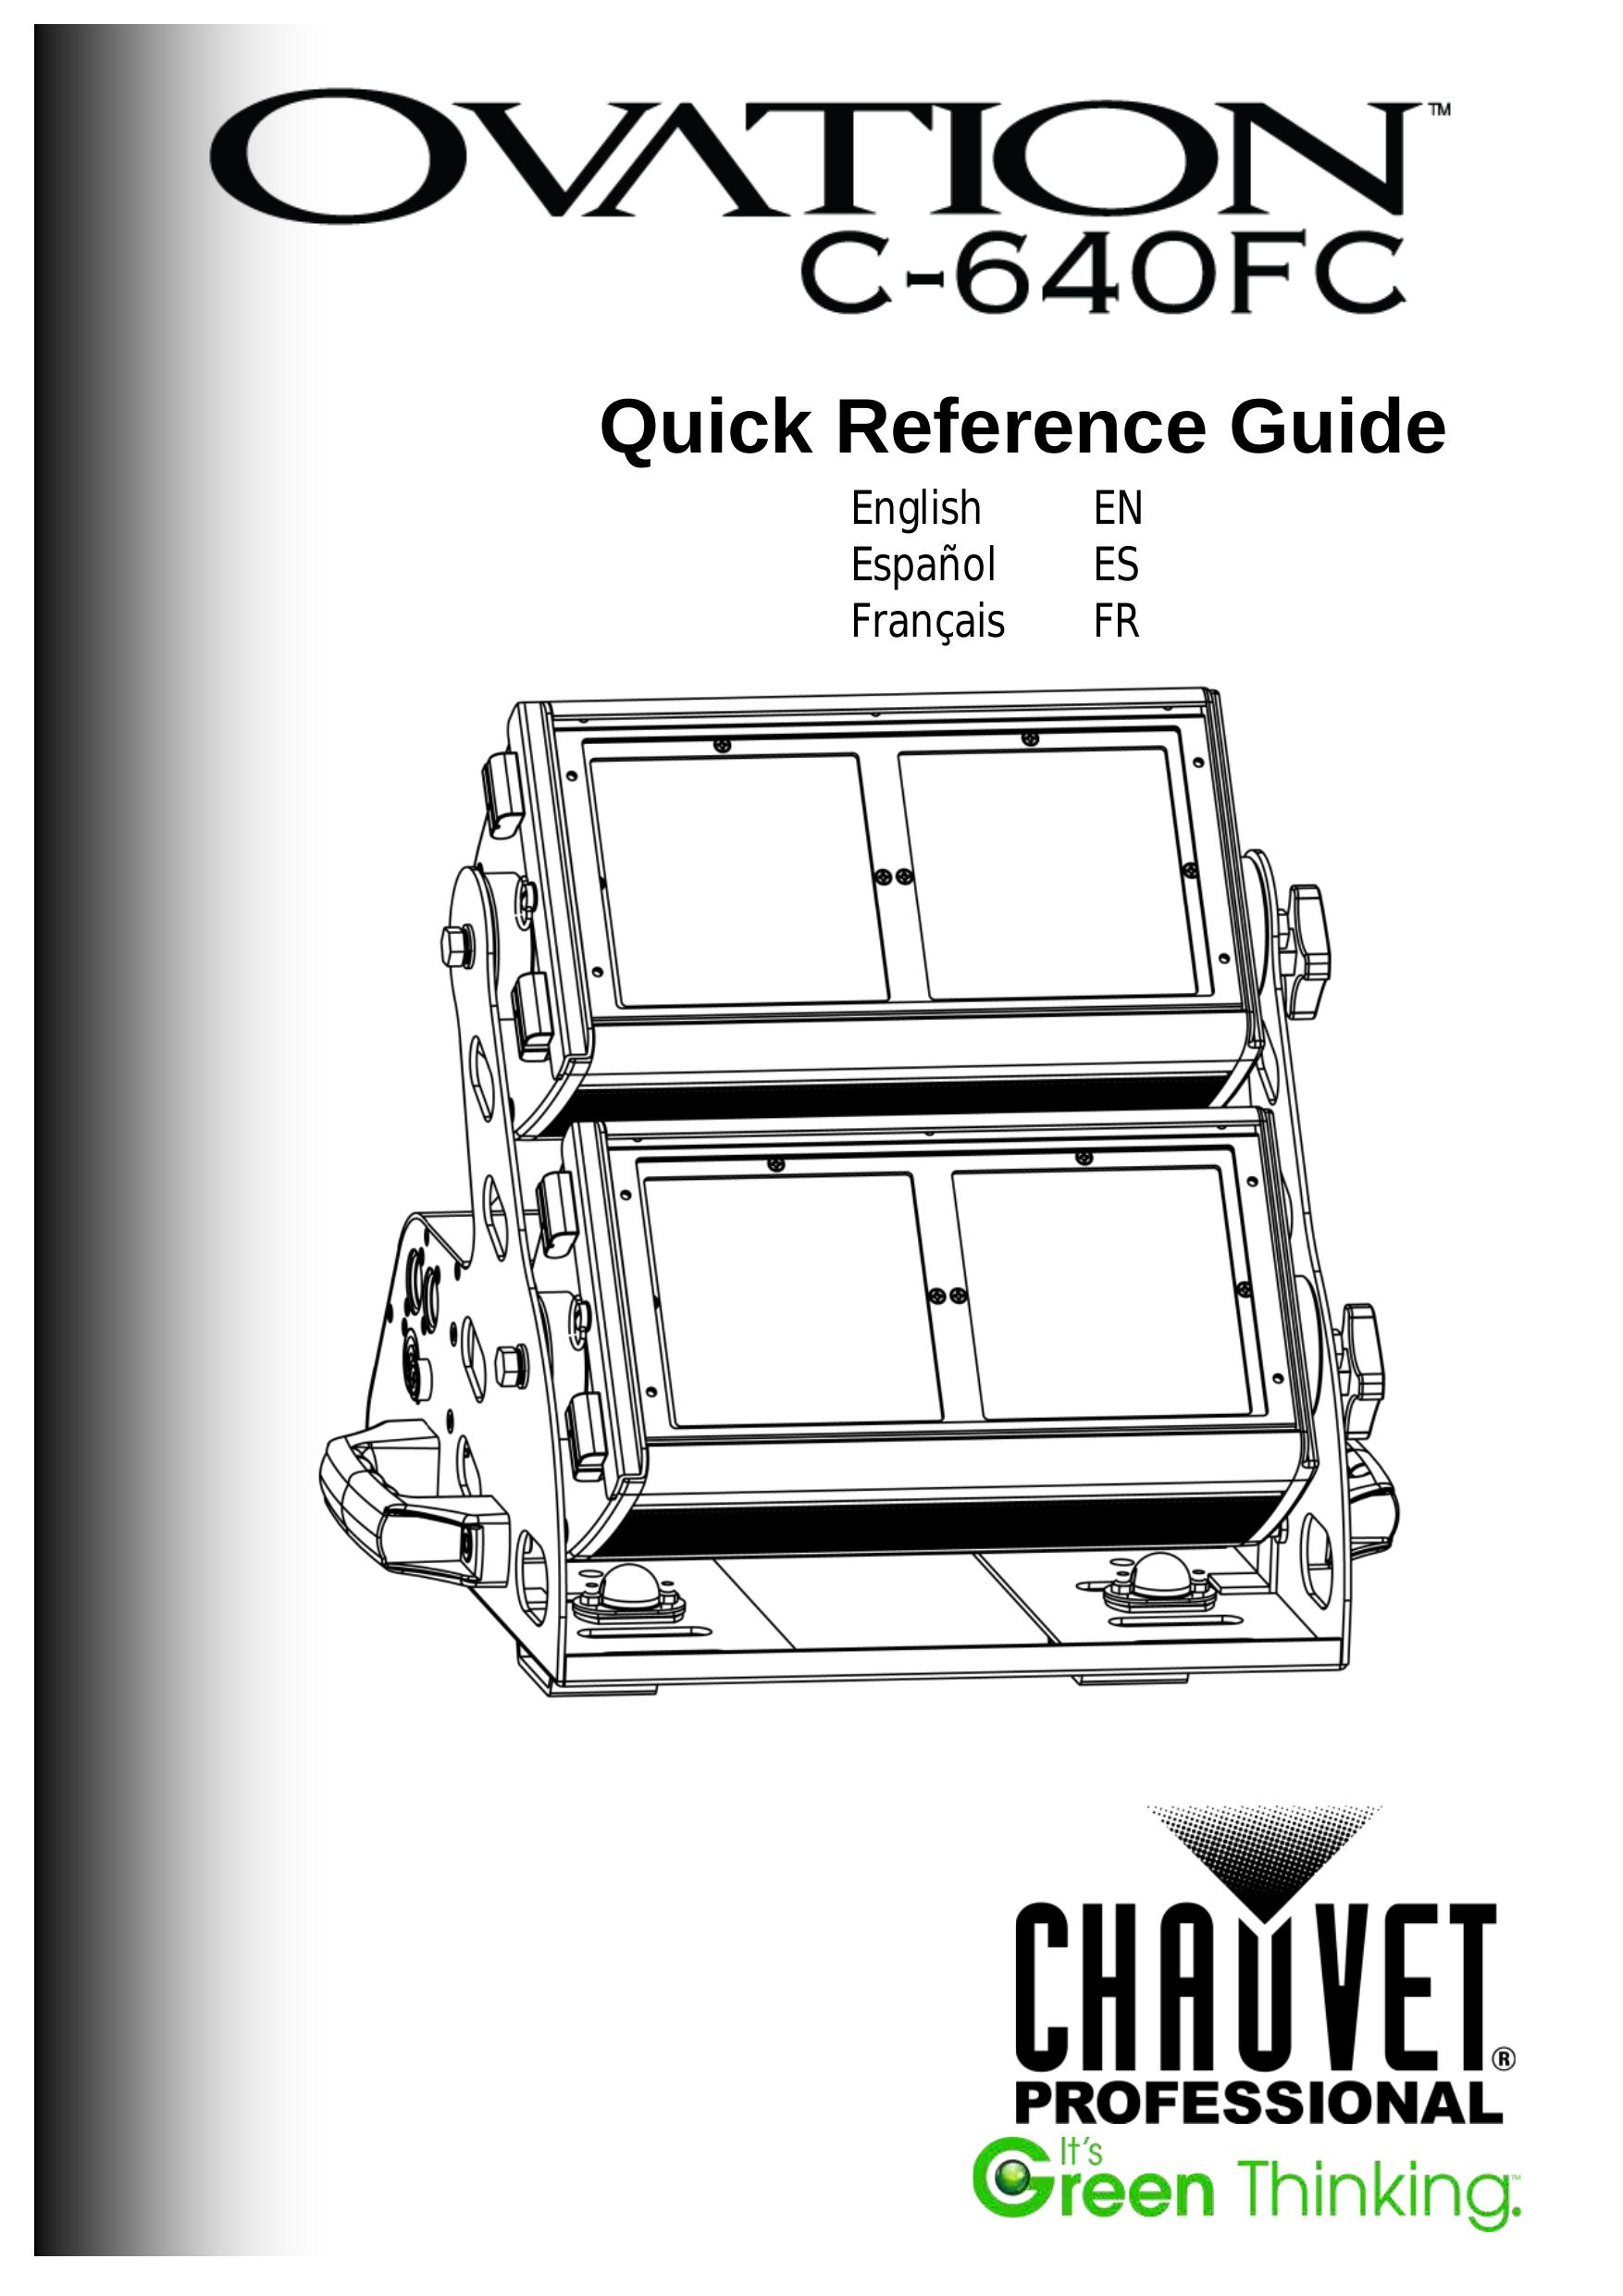 Chauvet C-640FC Marine Lighting User Manual